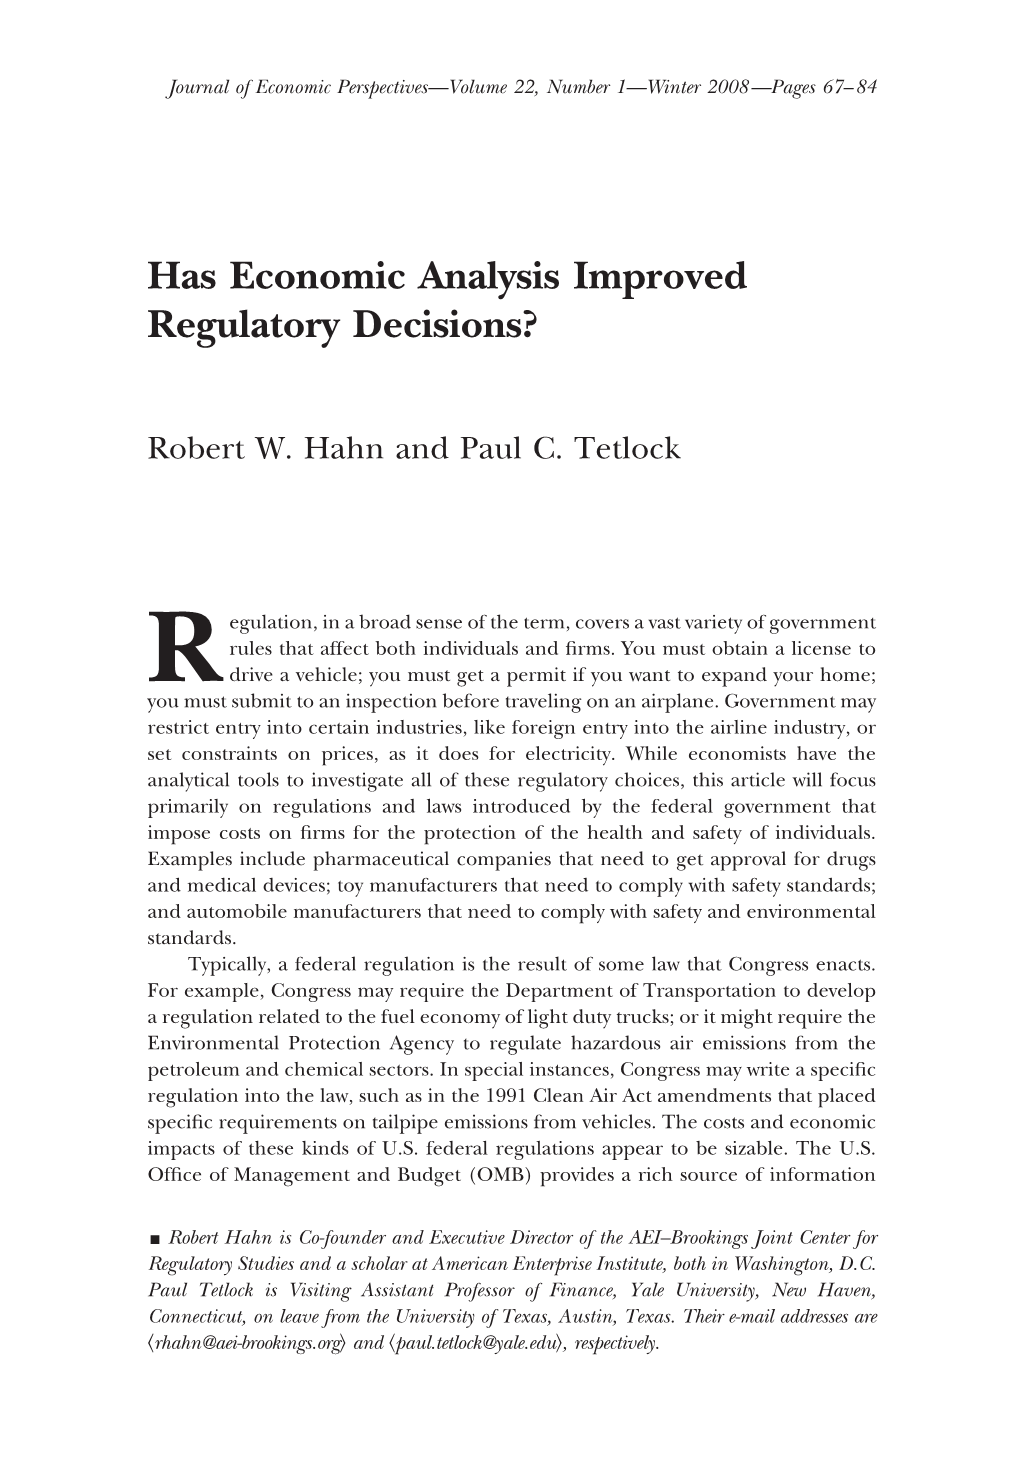 Has Economic Analysis Improved Regulatory Decisions?